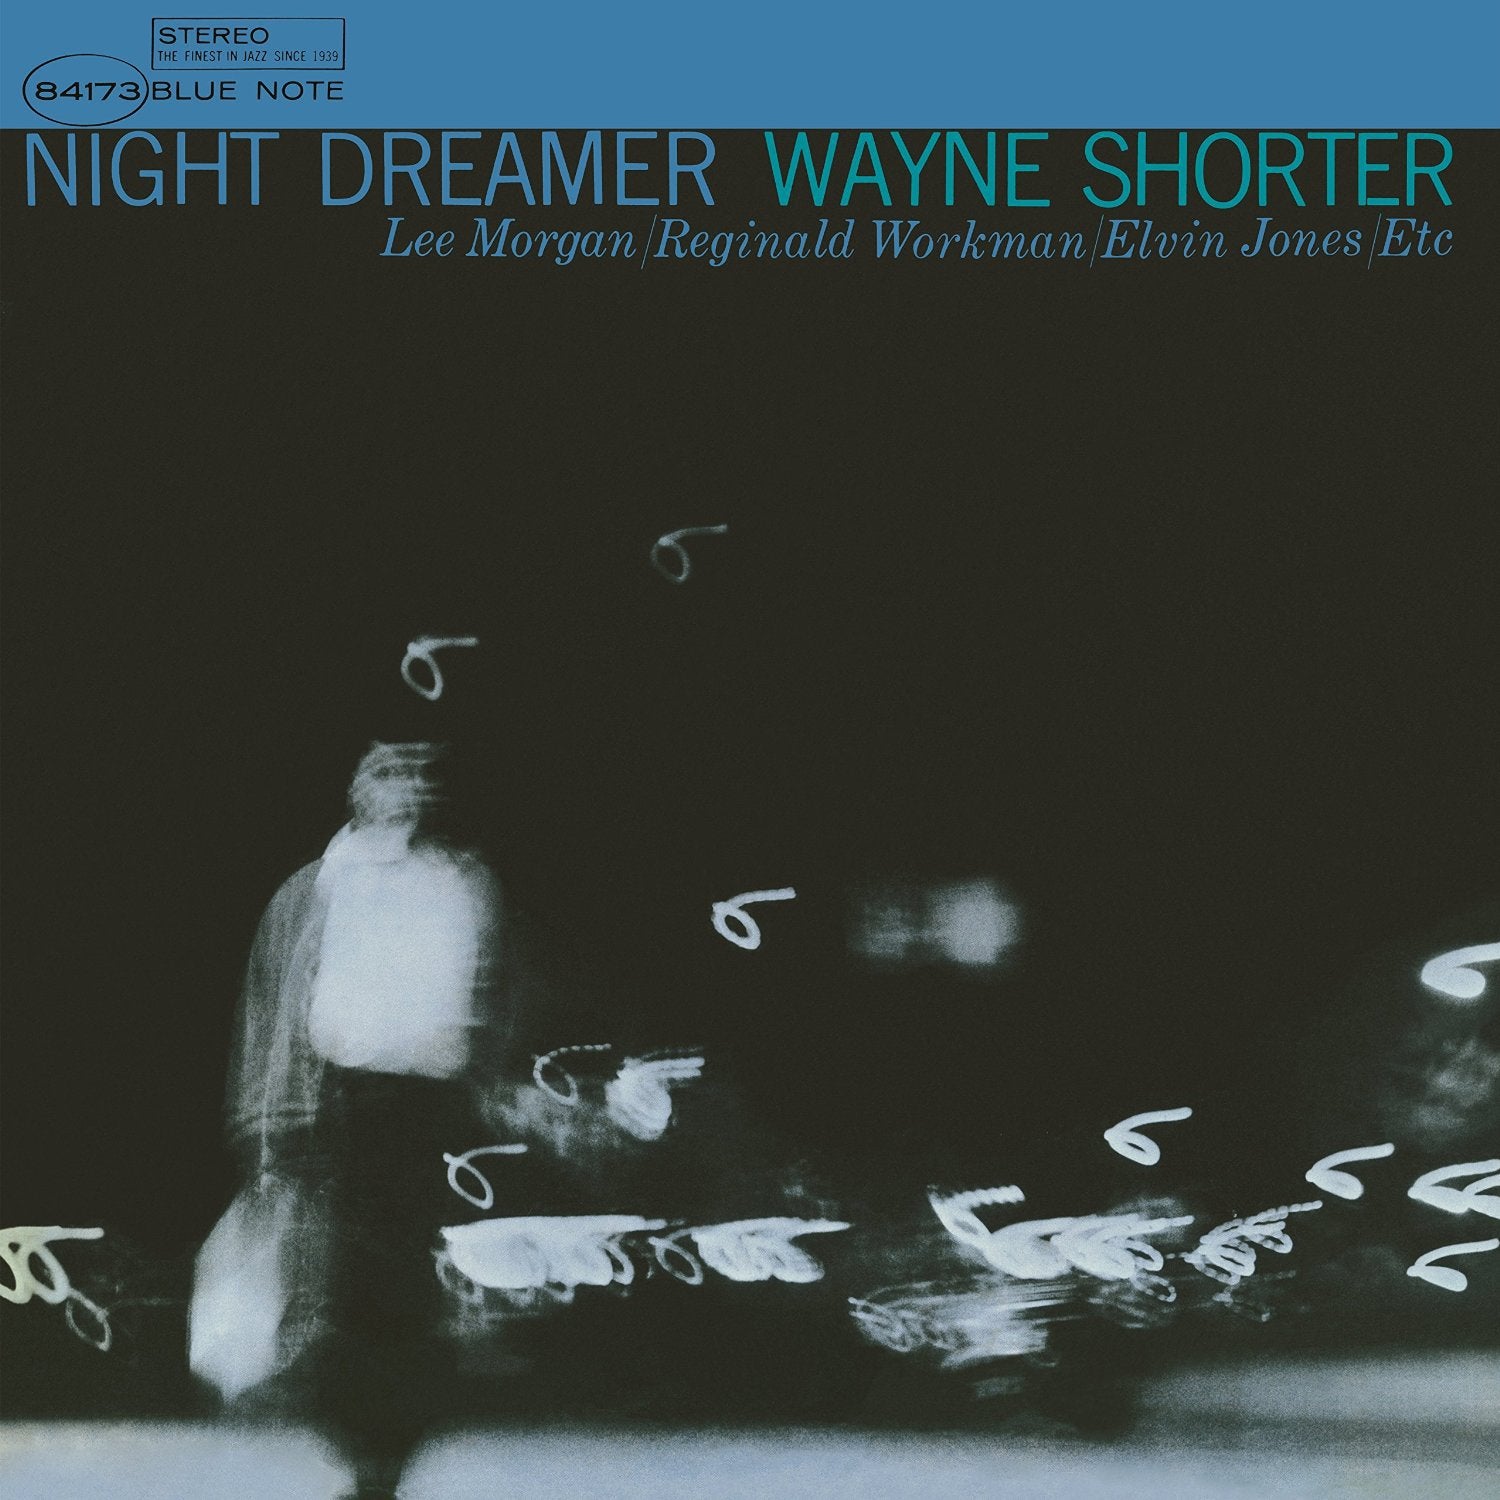 Wayne Shorter - Night Dreameraa